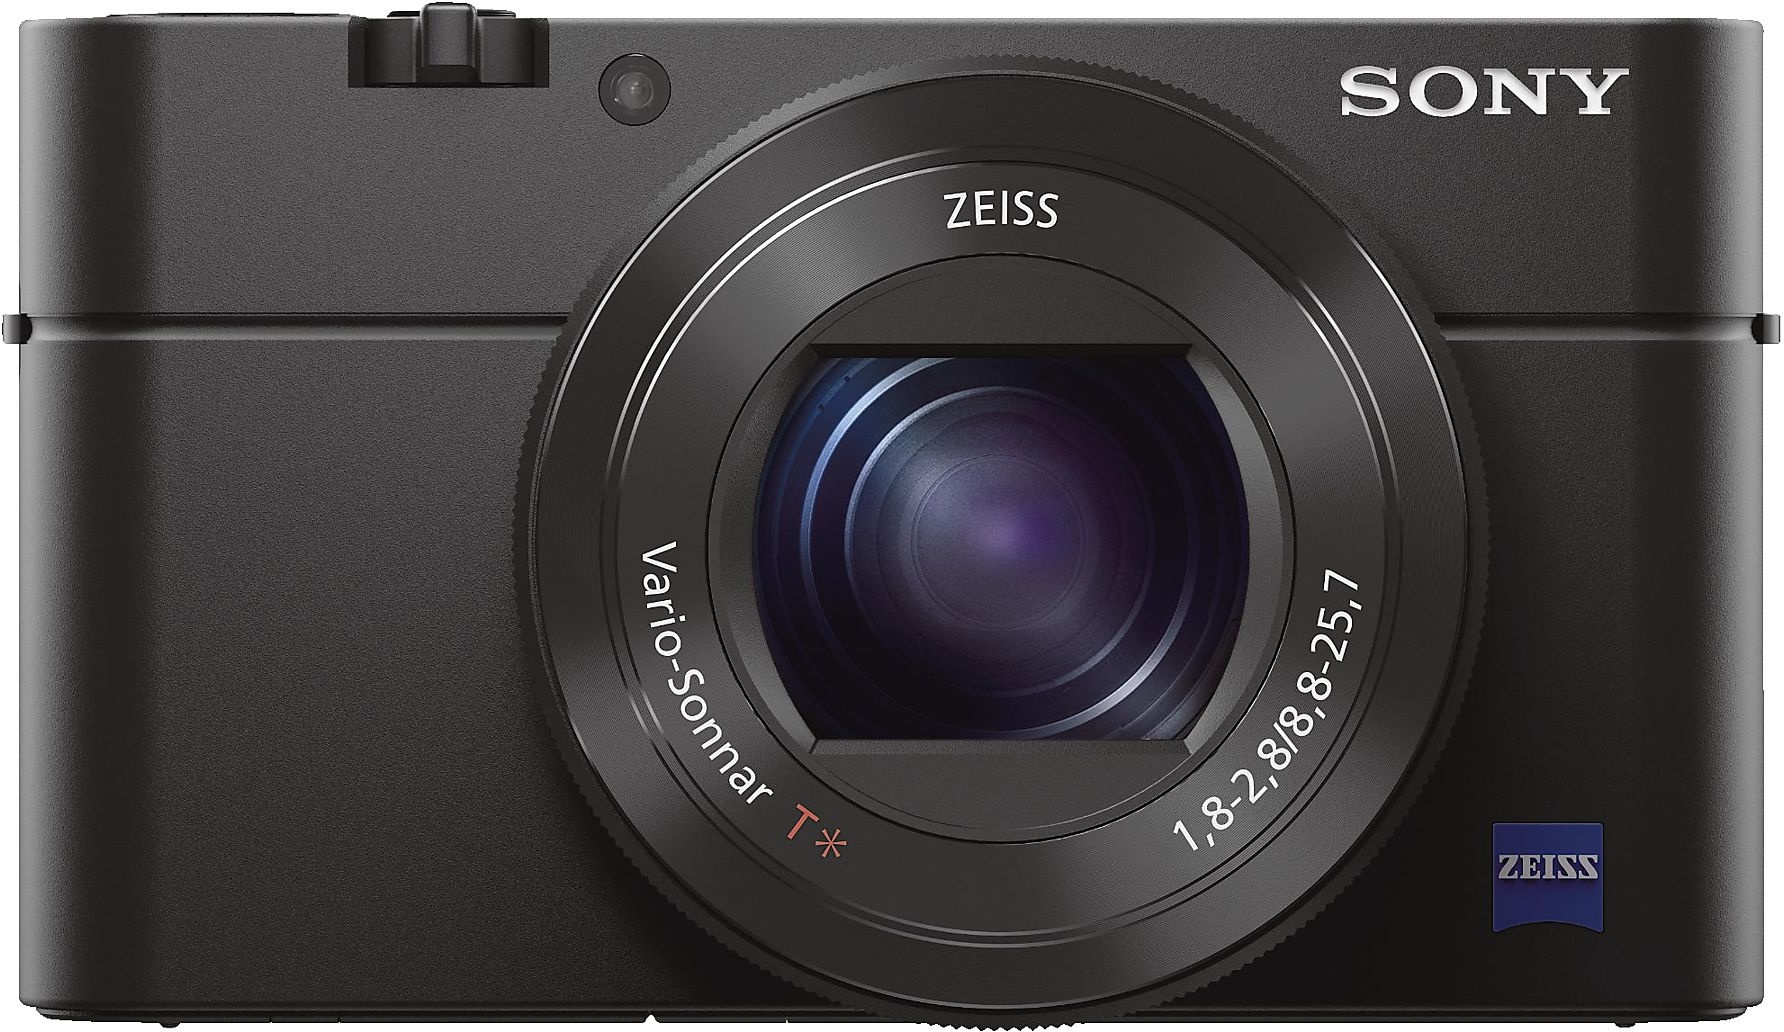 SONY Cyber-shot DSC-RX100 III Zeiss NFC Digitalkamera Schwarz, , 2.9x opt. Zoom, Xtra Fine/TFT-LCD, WLAN